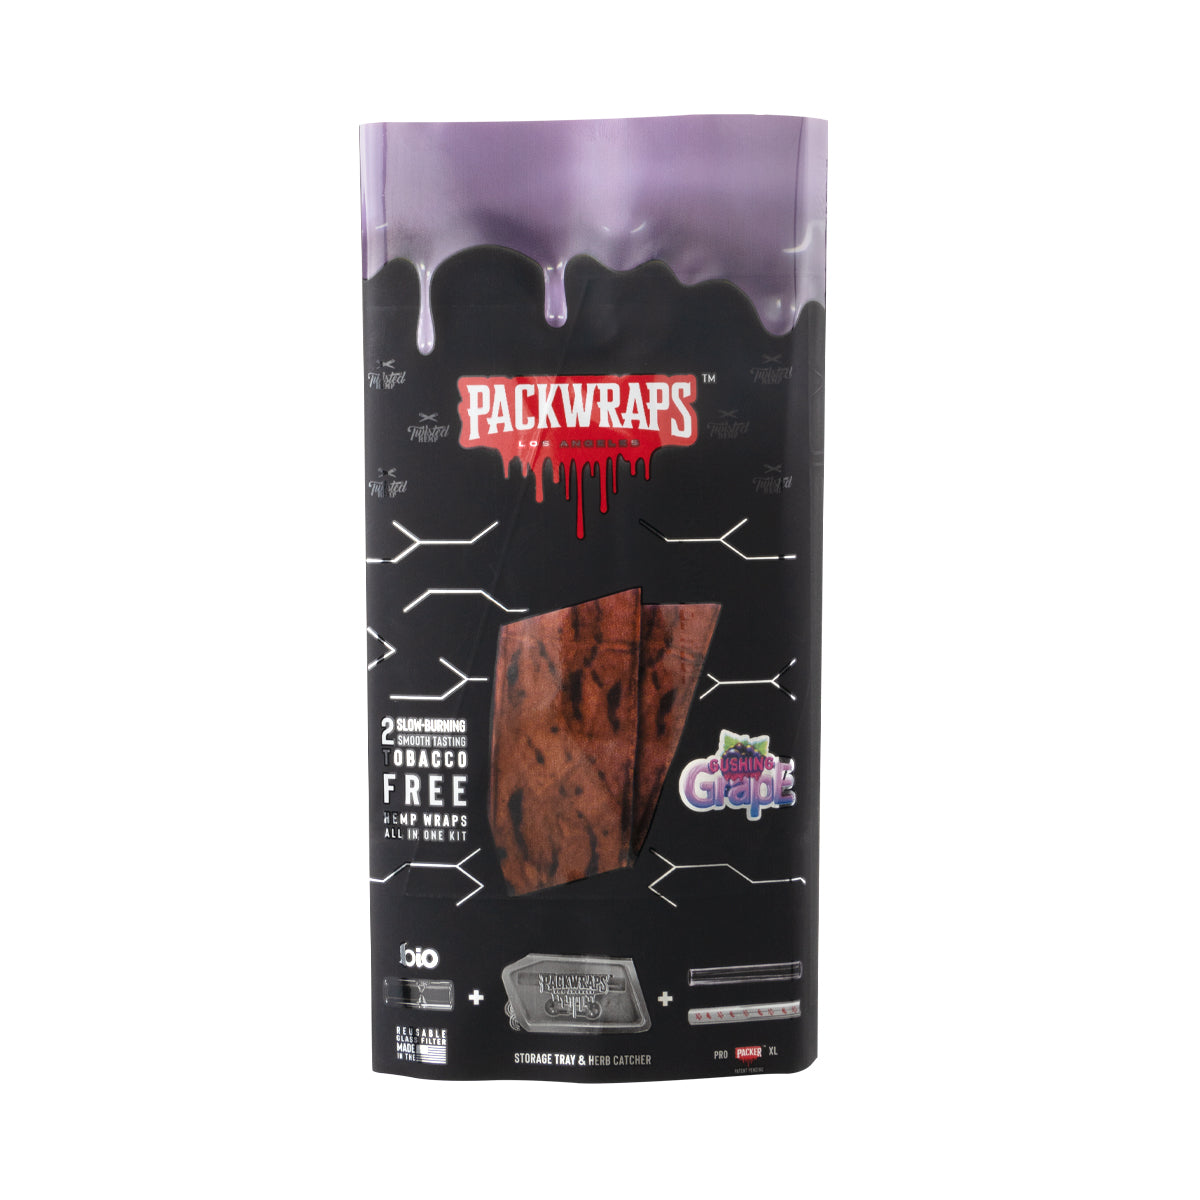 Packwraps X Twisted X Bio Wrap Kit - Gushin Grape - 10 Pack Box